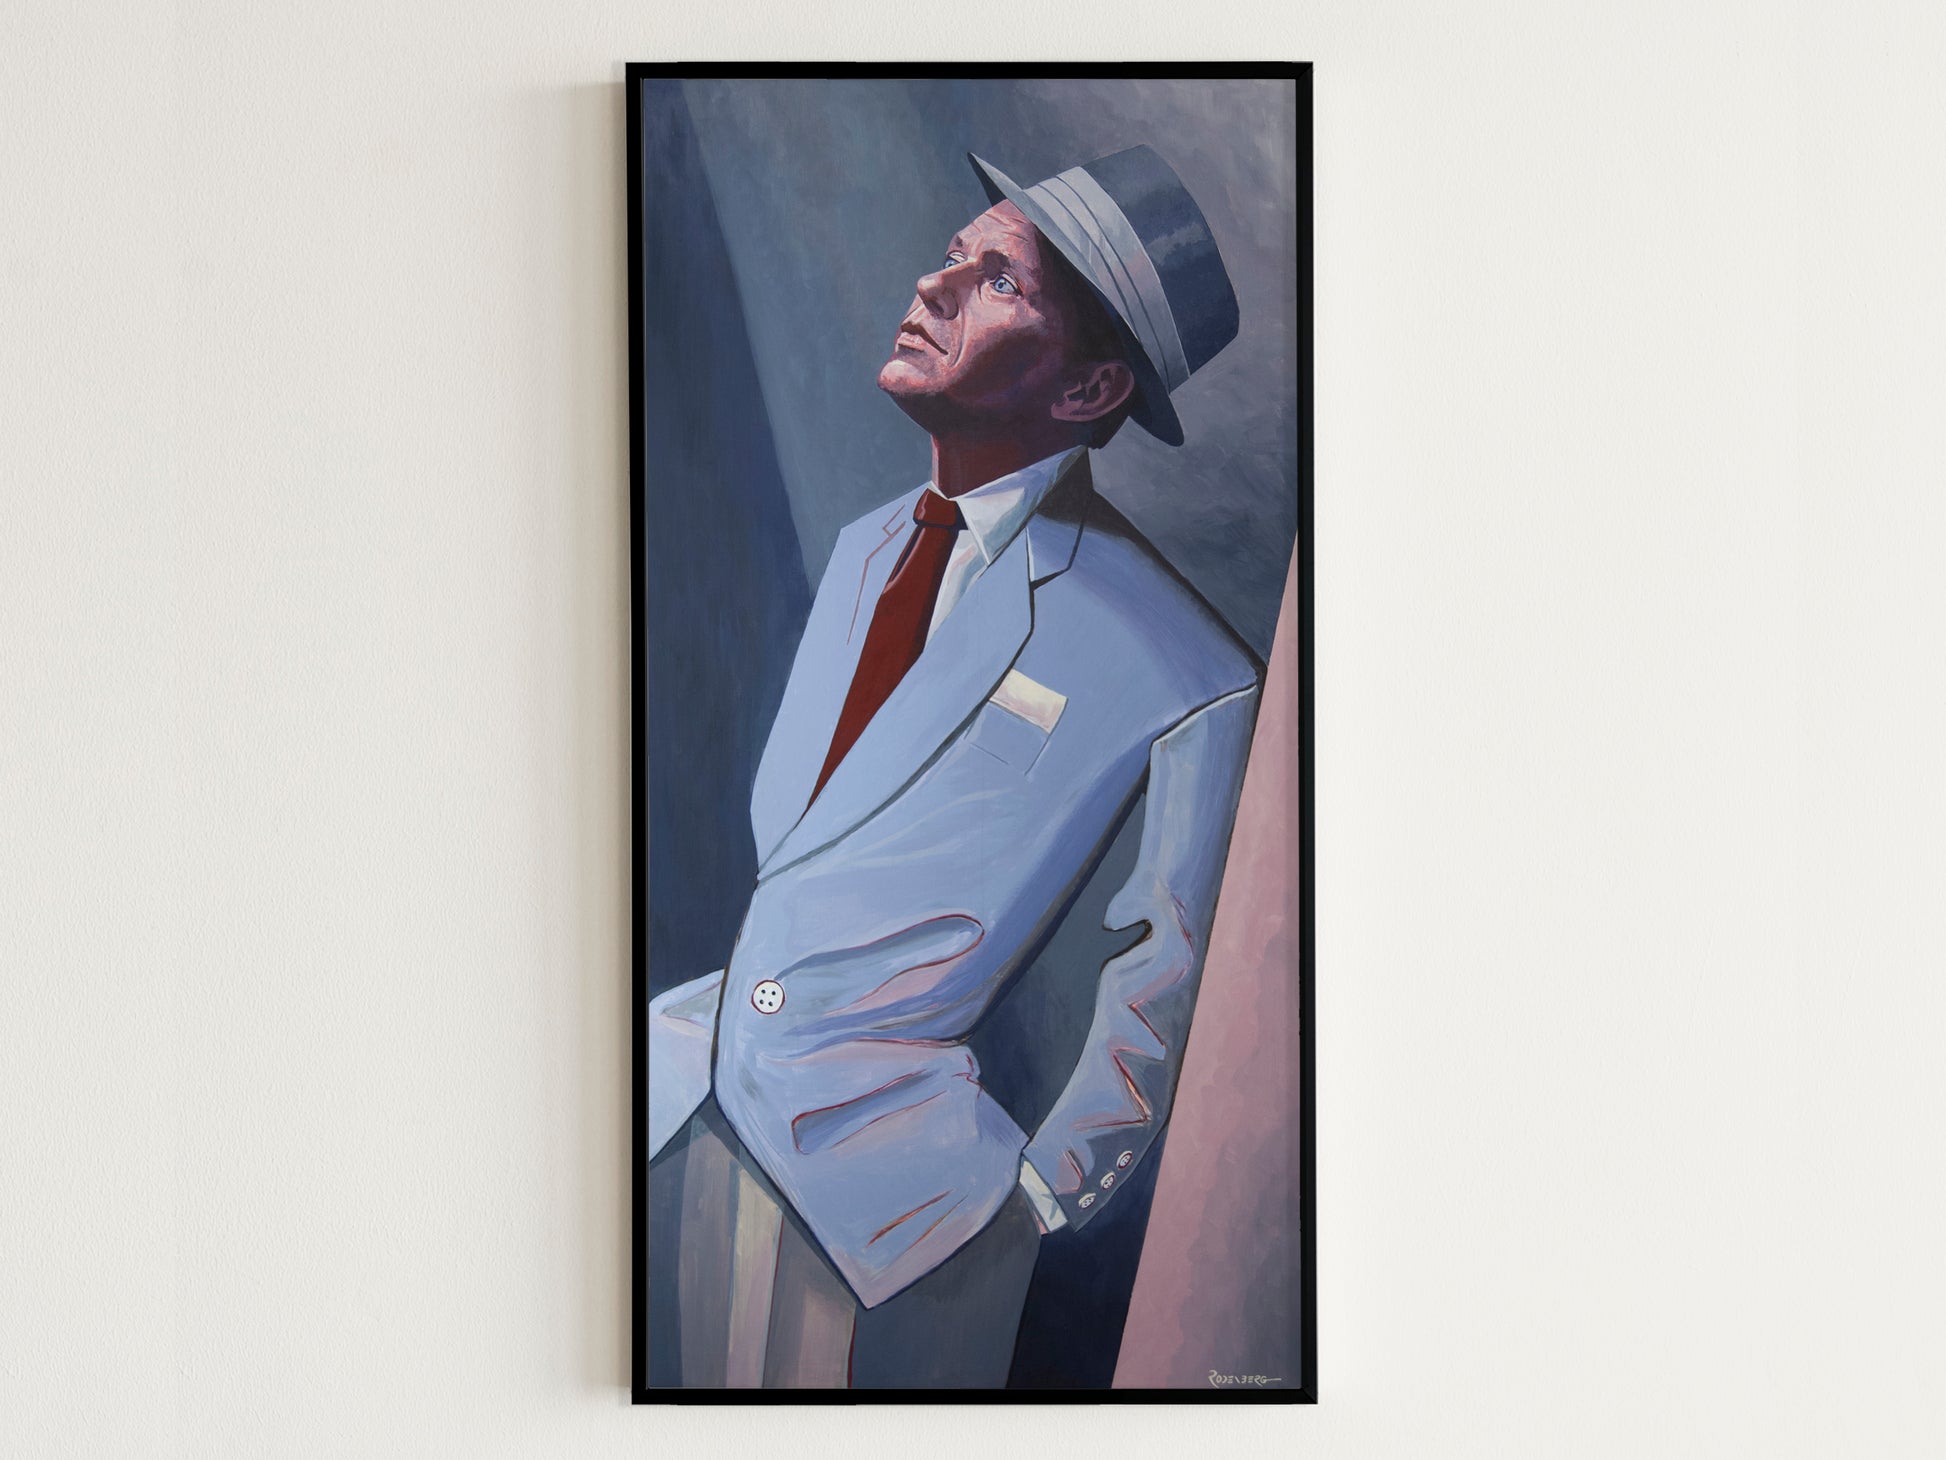 Painting of Frank Sinatra, fine art home decor